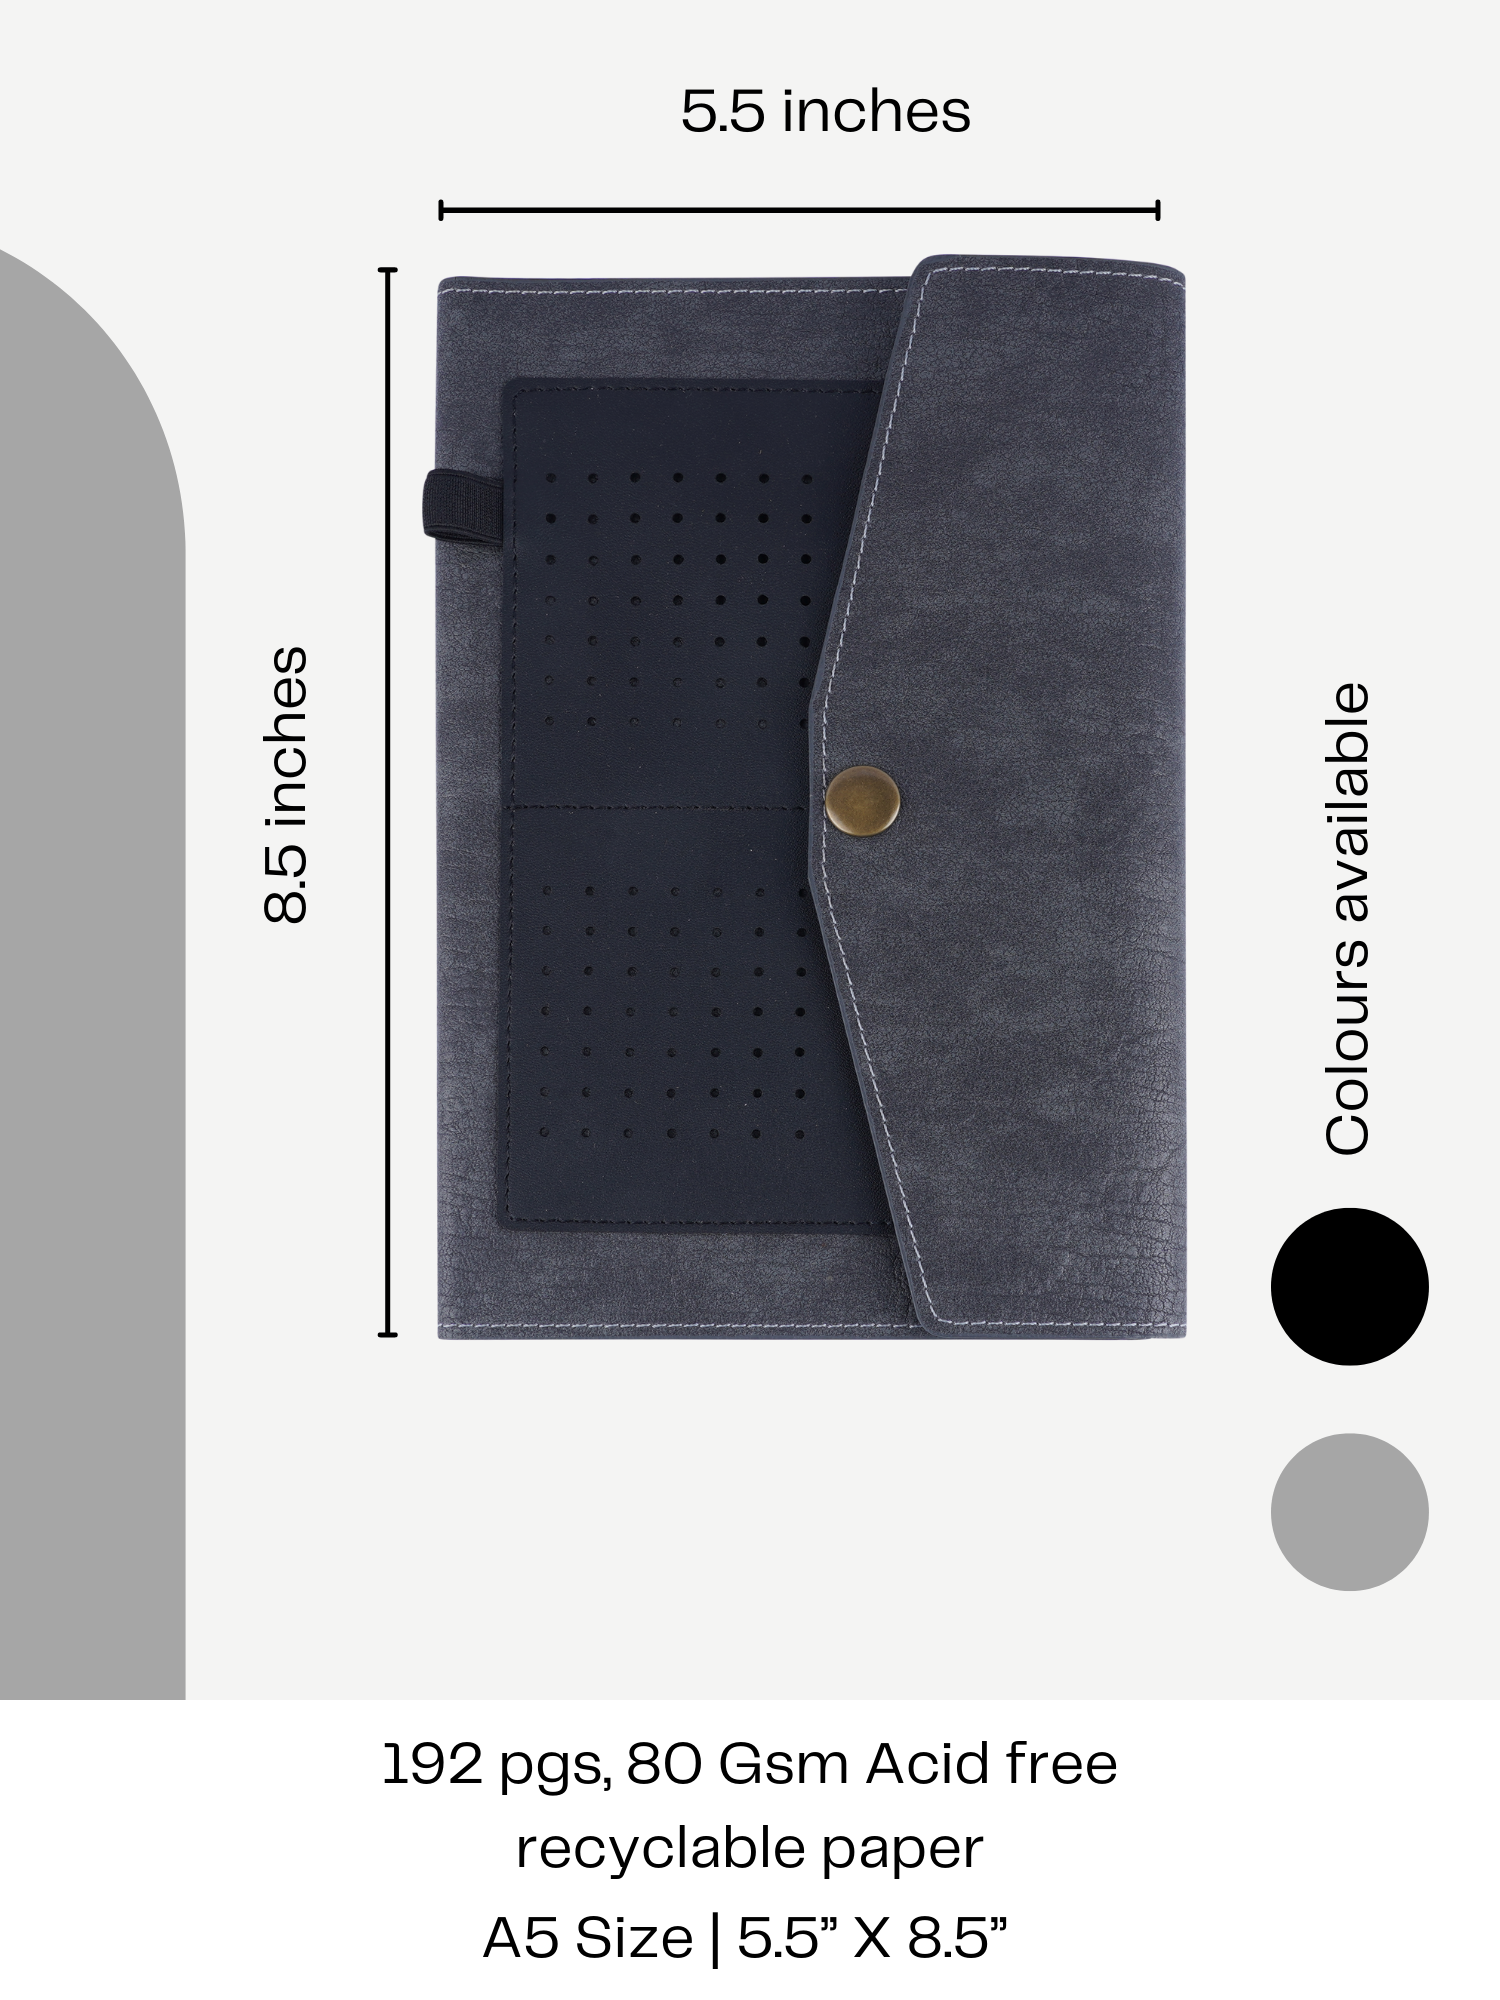 Citadel Slip Jacket A5 Executive PU Leather Diary - Grey + Black